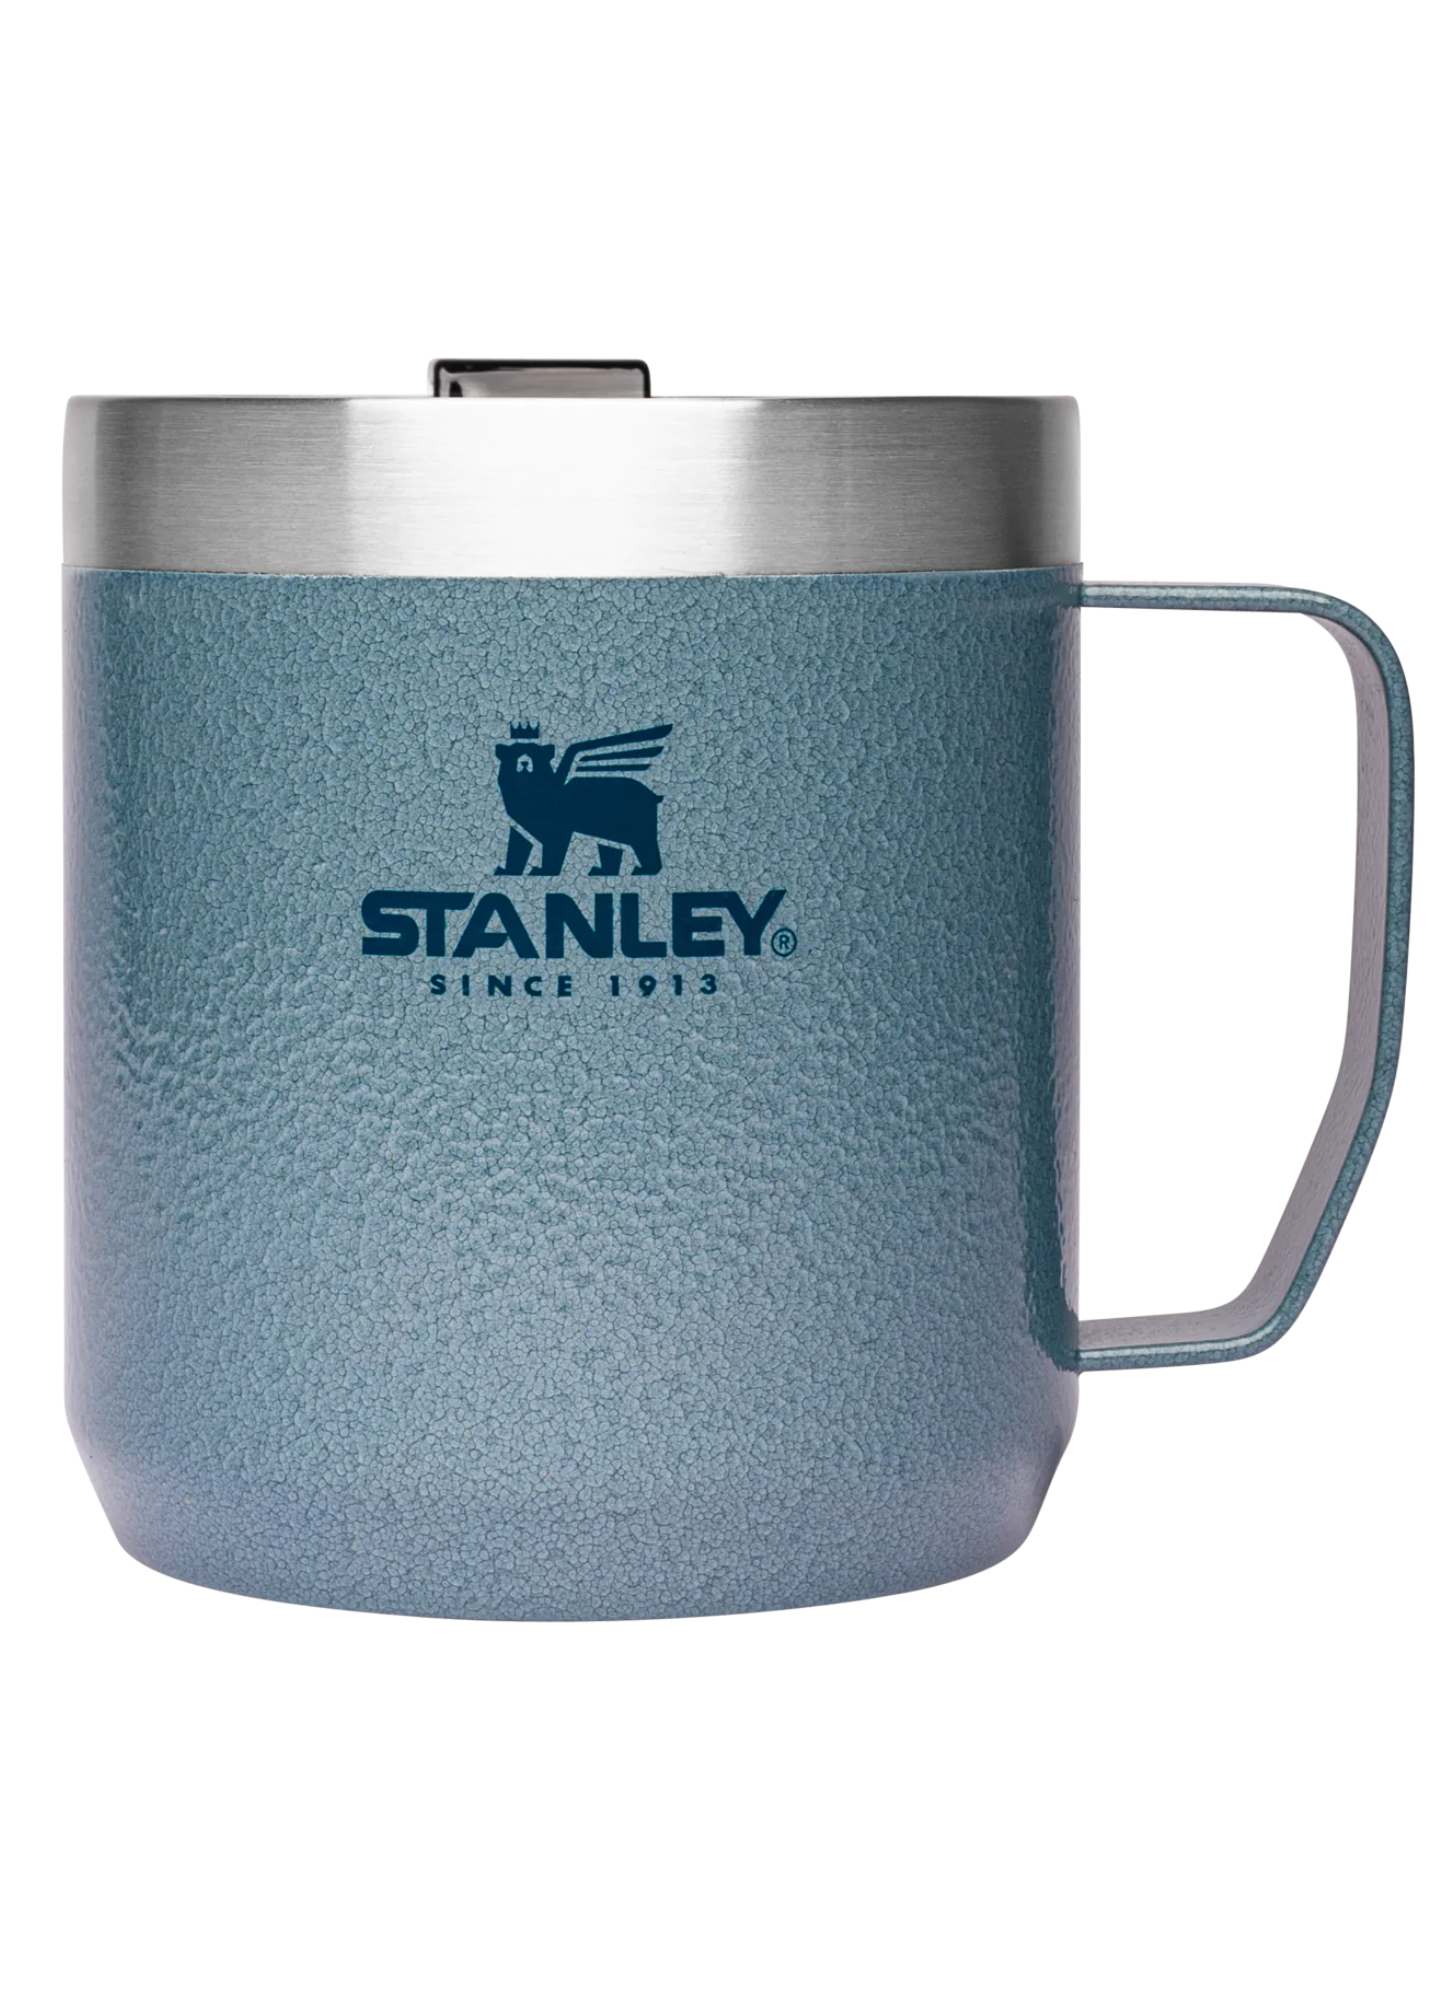  Stanley Classic Travel Mug French Press 16oz Charcoal Glow :  Home & Kitchen